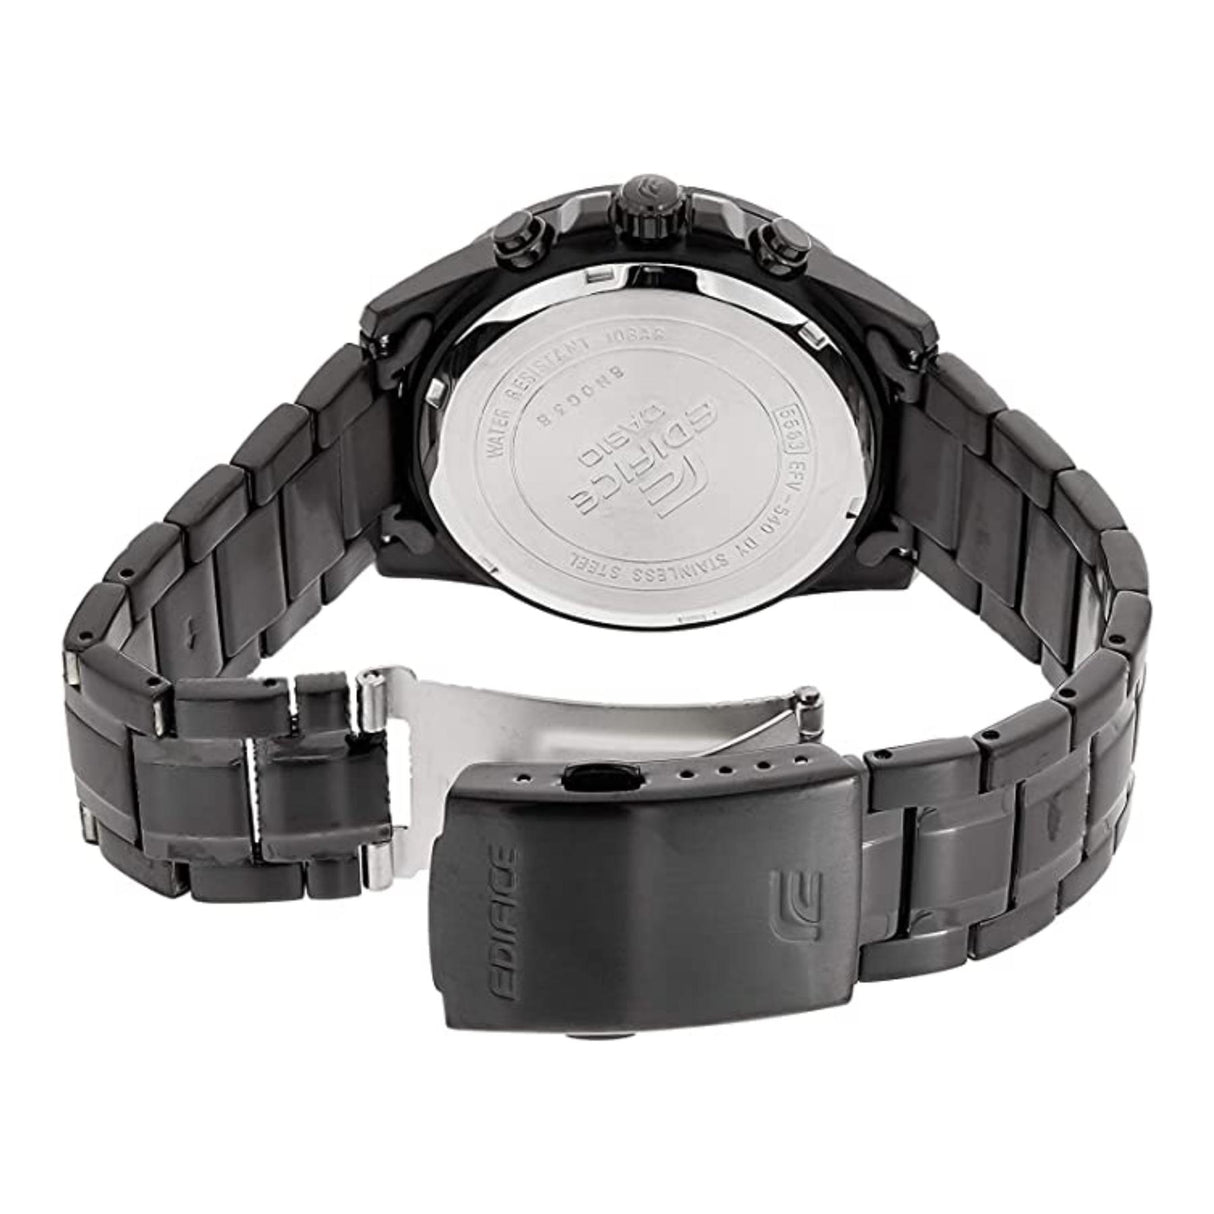 Casio Edifice Men Chronograph Quartz Watch with Stainless Steel Bracelet│Black - PROTEUS MARINE STORE